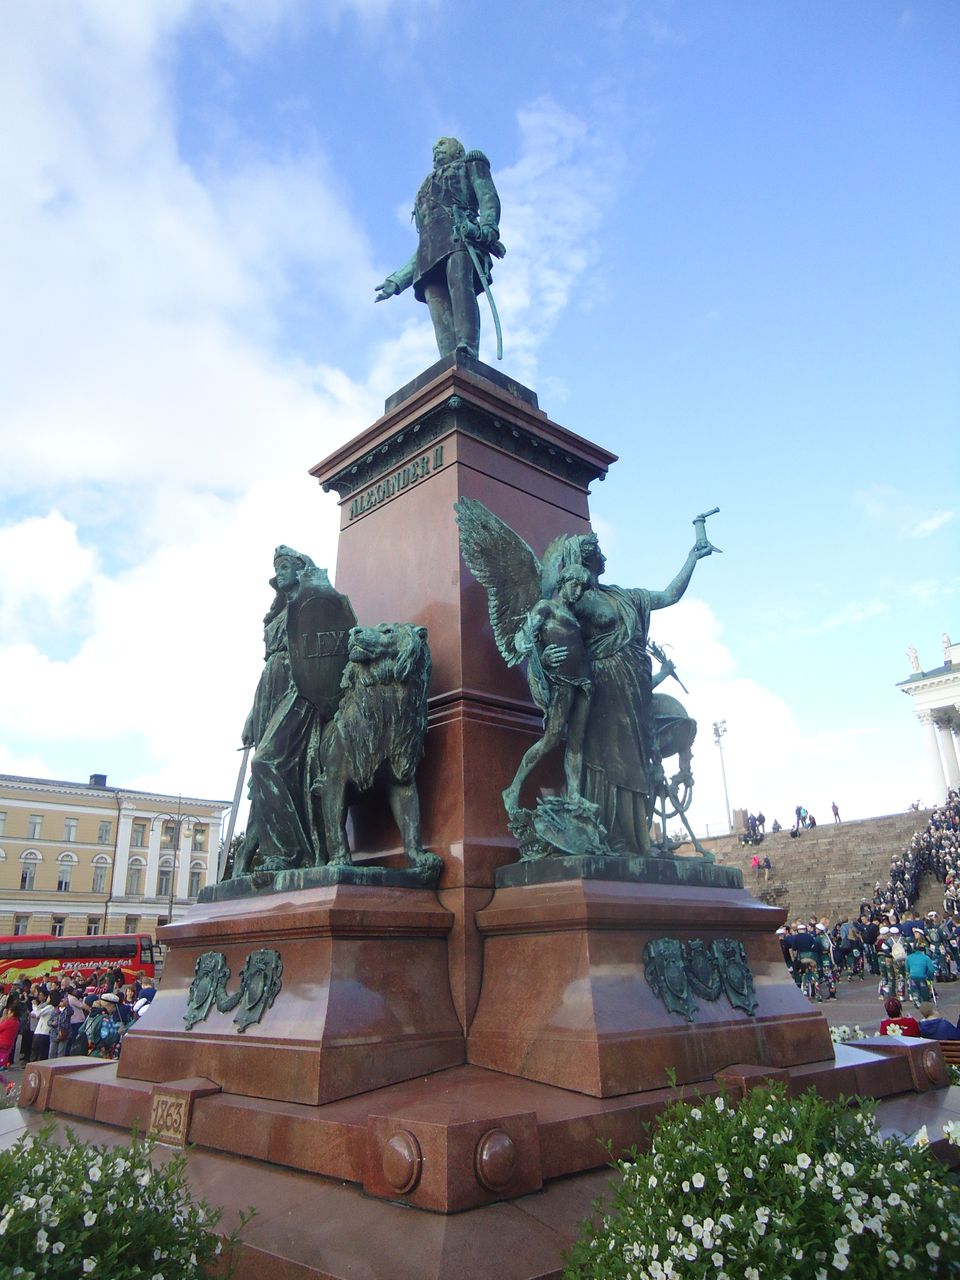 Helsinkistatue